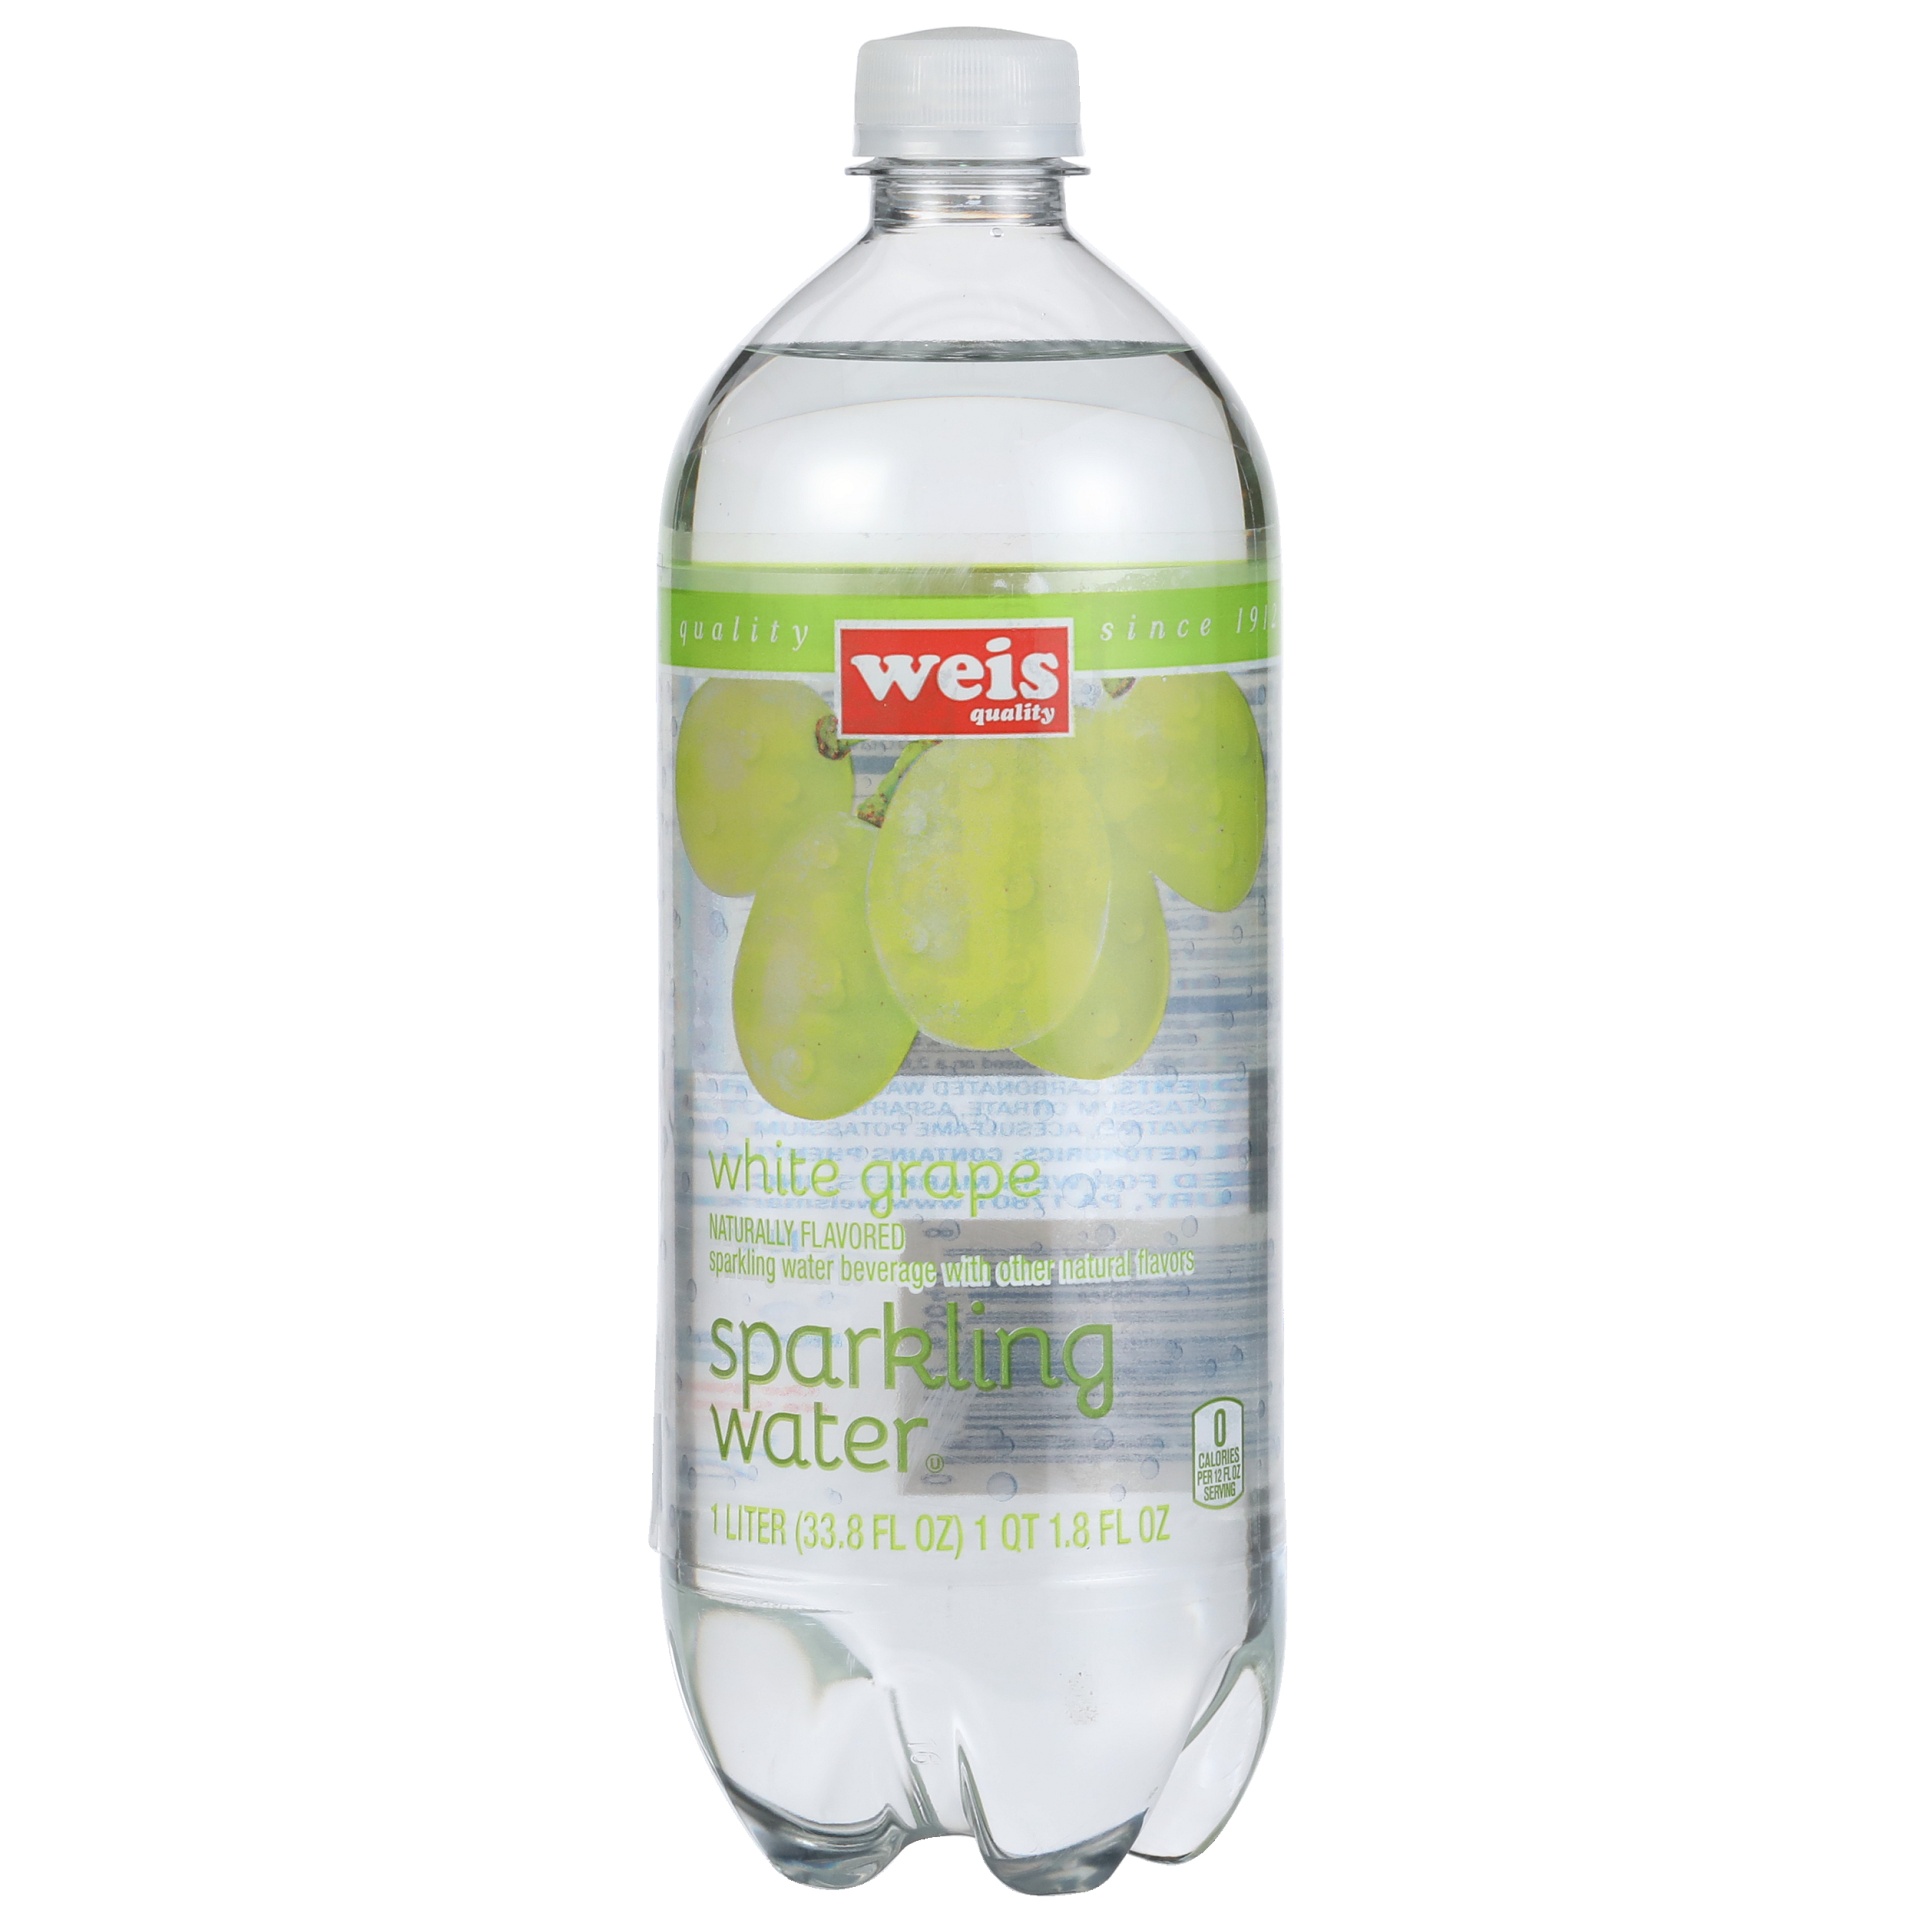 slide 1 of 6, Weis Quality Sparkling White Grape Water, 33.8 fl oz